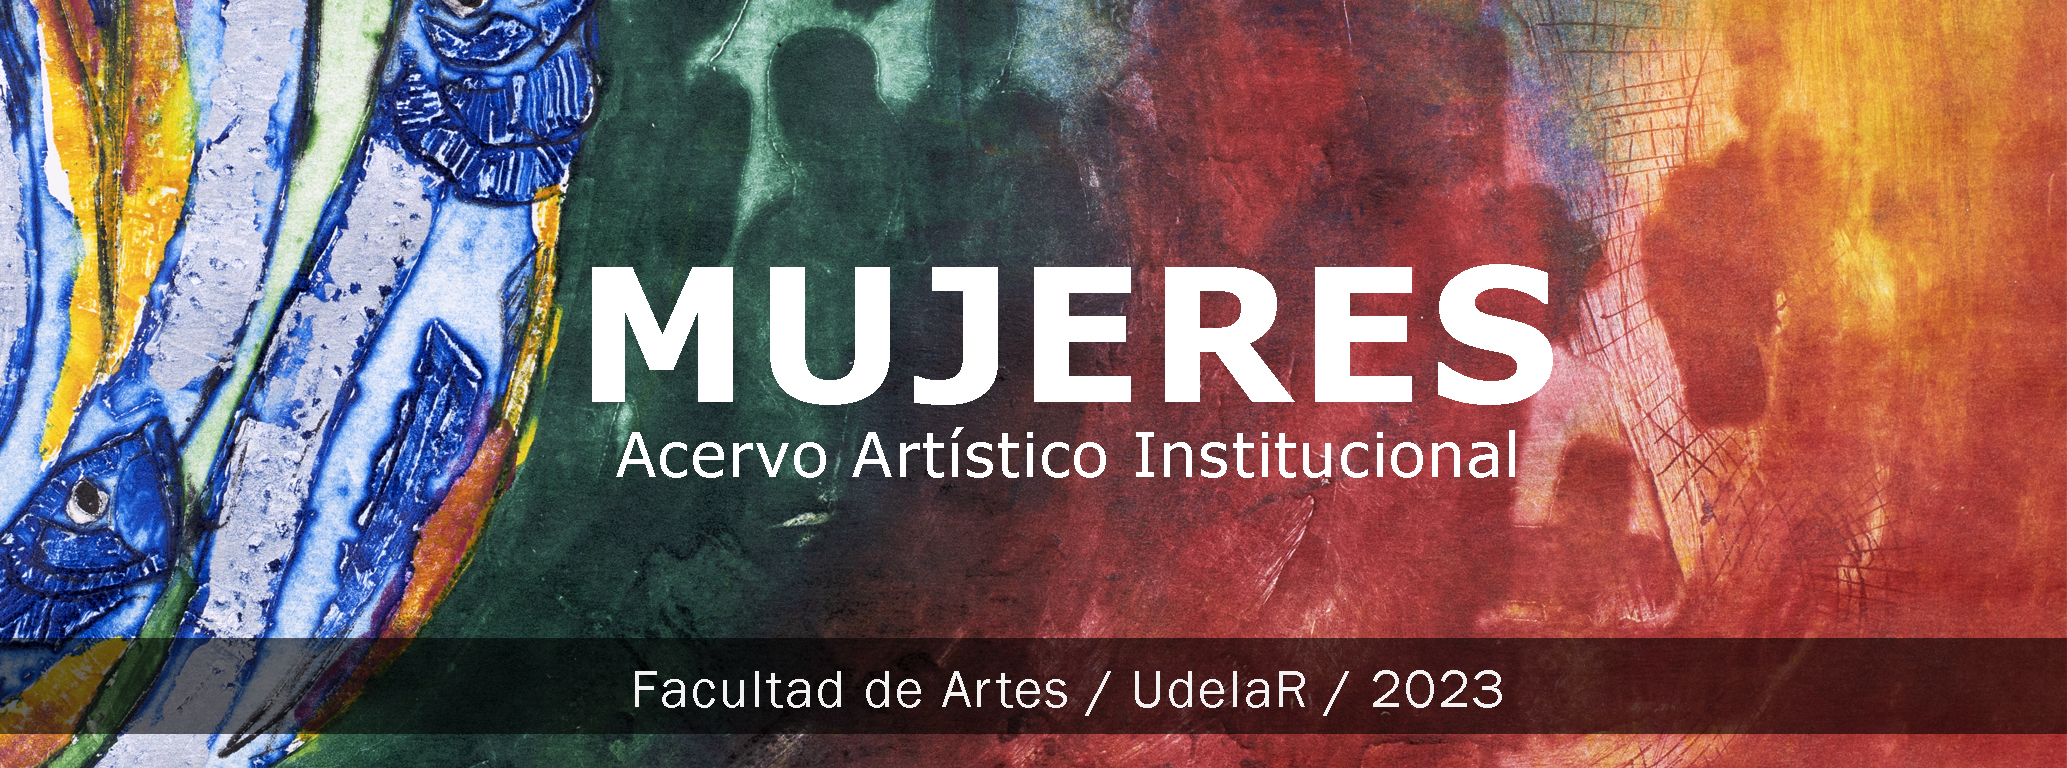 MUJERES / Acervo Artístico Institucional